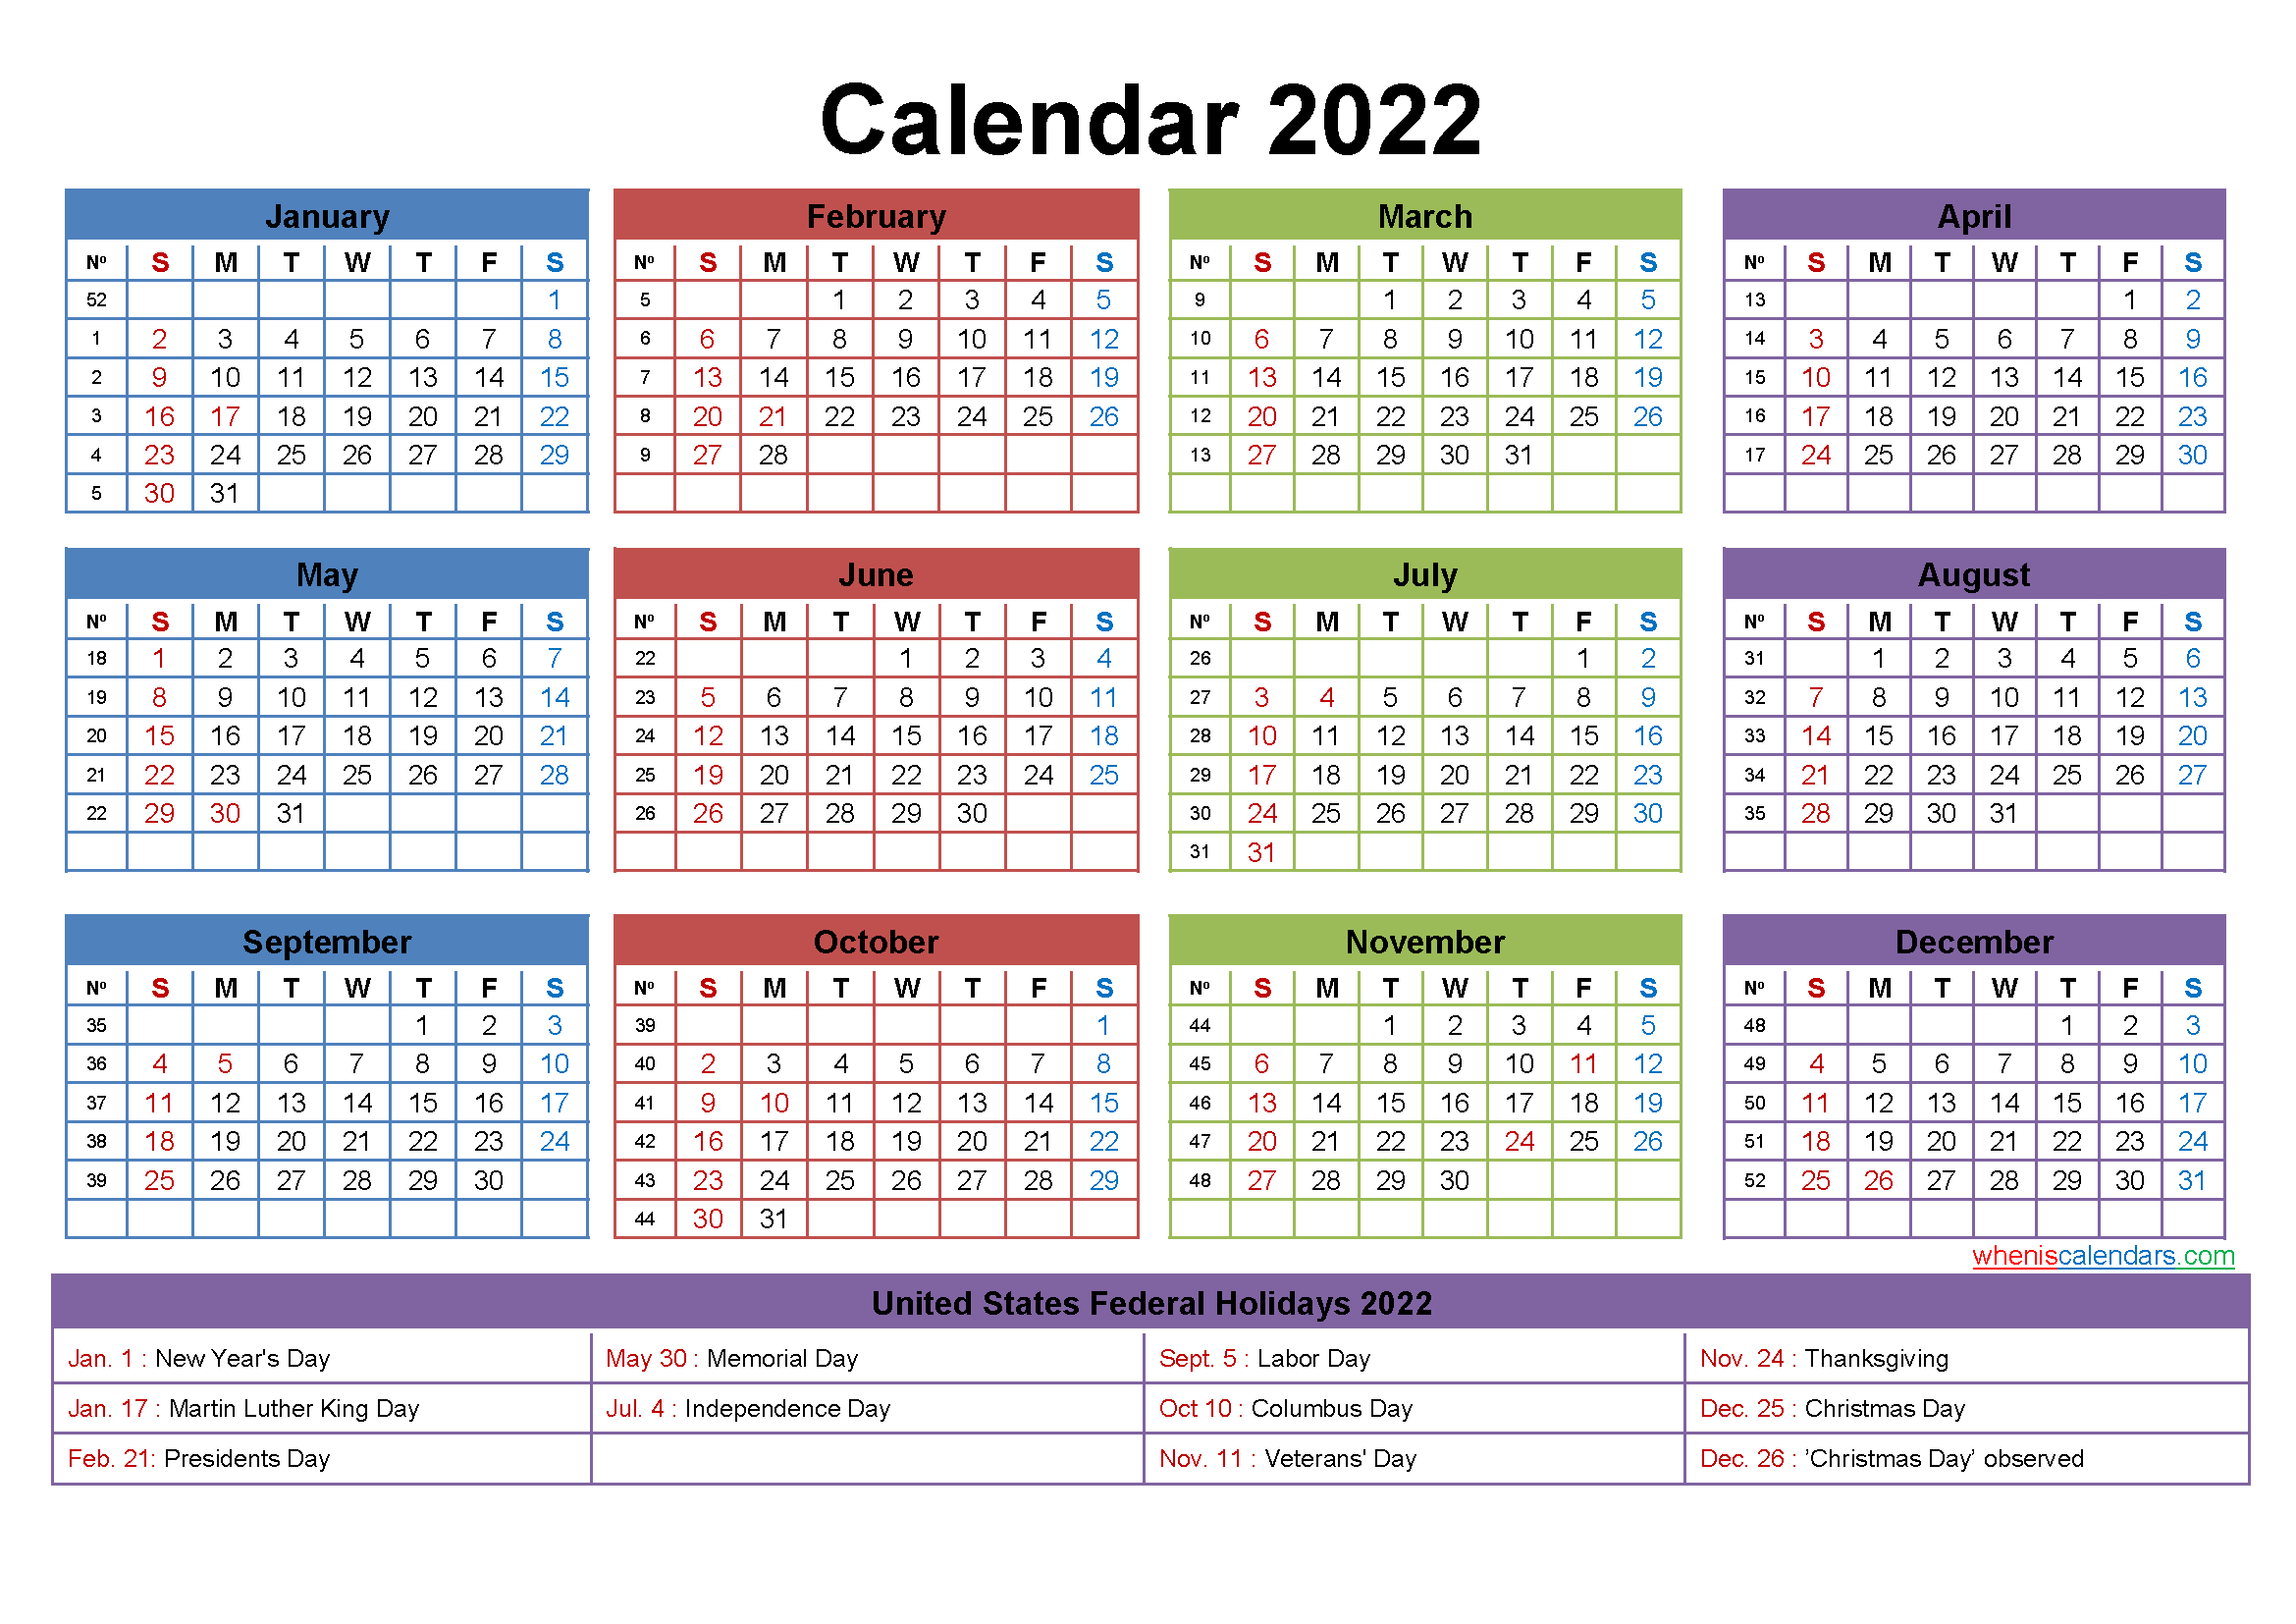 Maxine Desk Calendar 2022 With Holidays Printable-2022 Calendar With Holidays Printable Usa